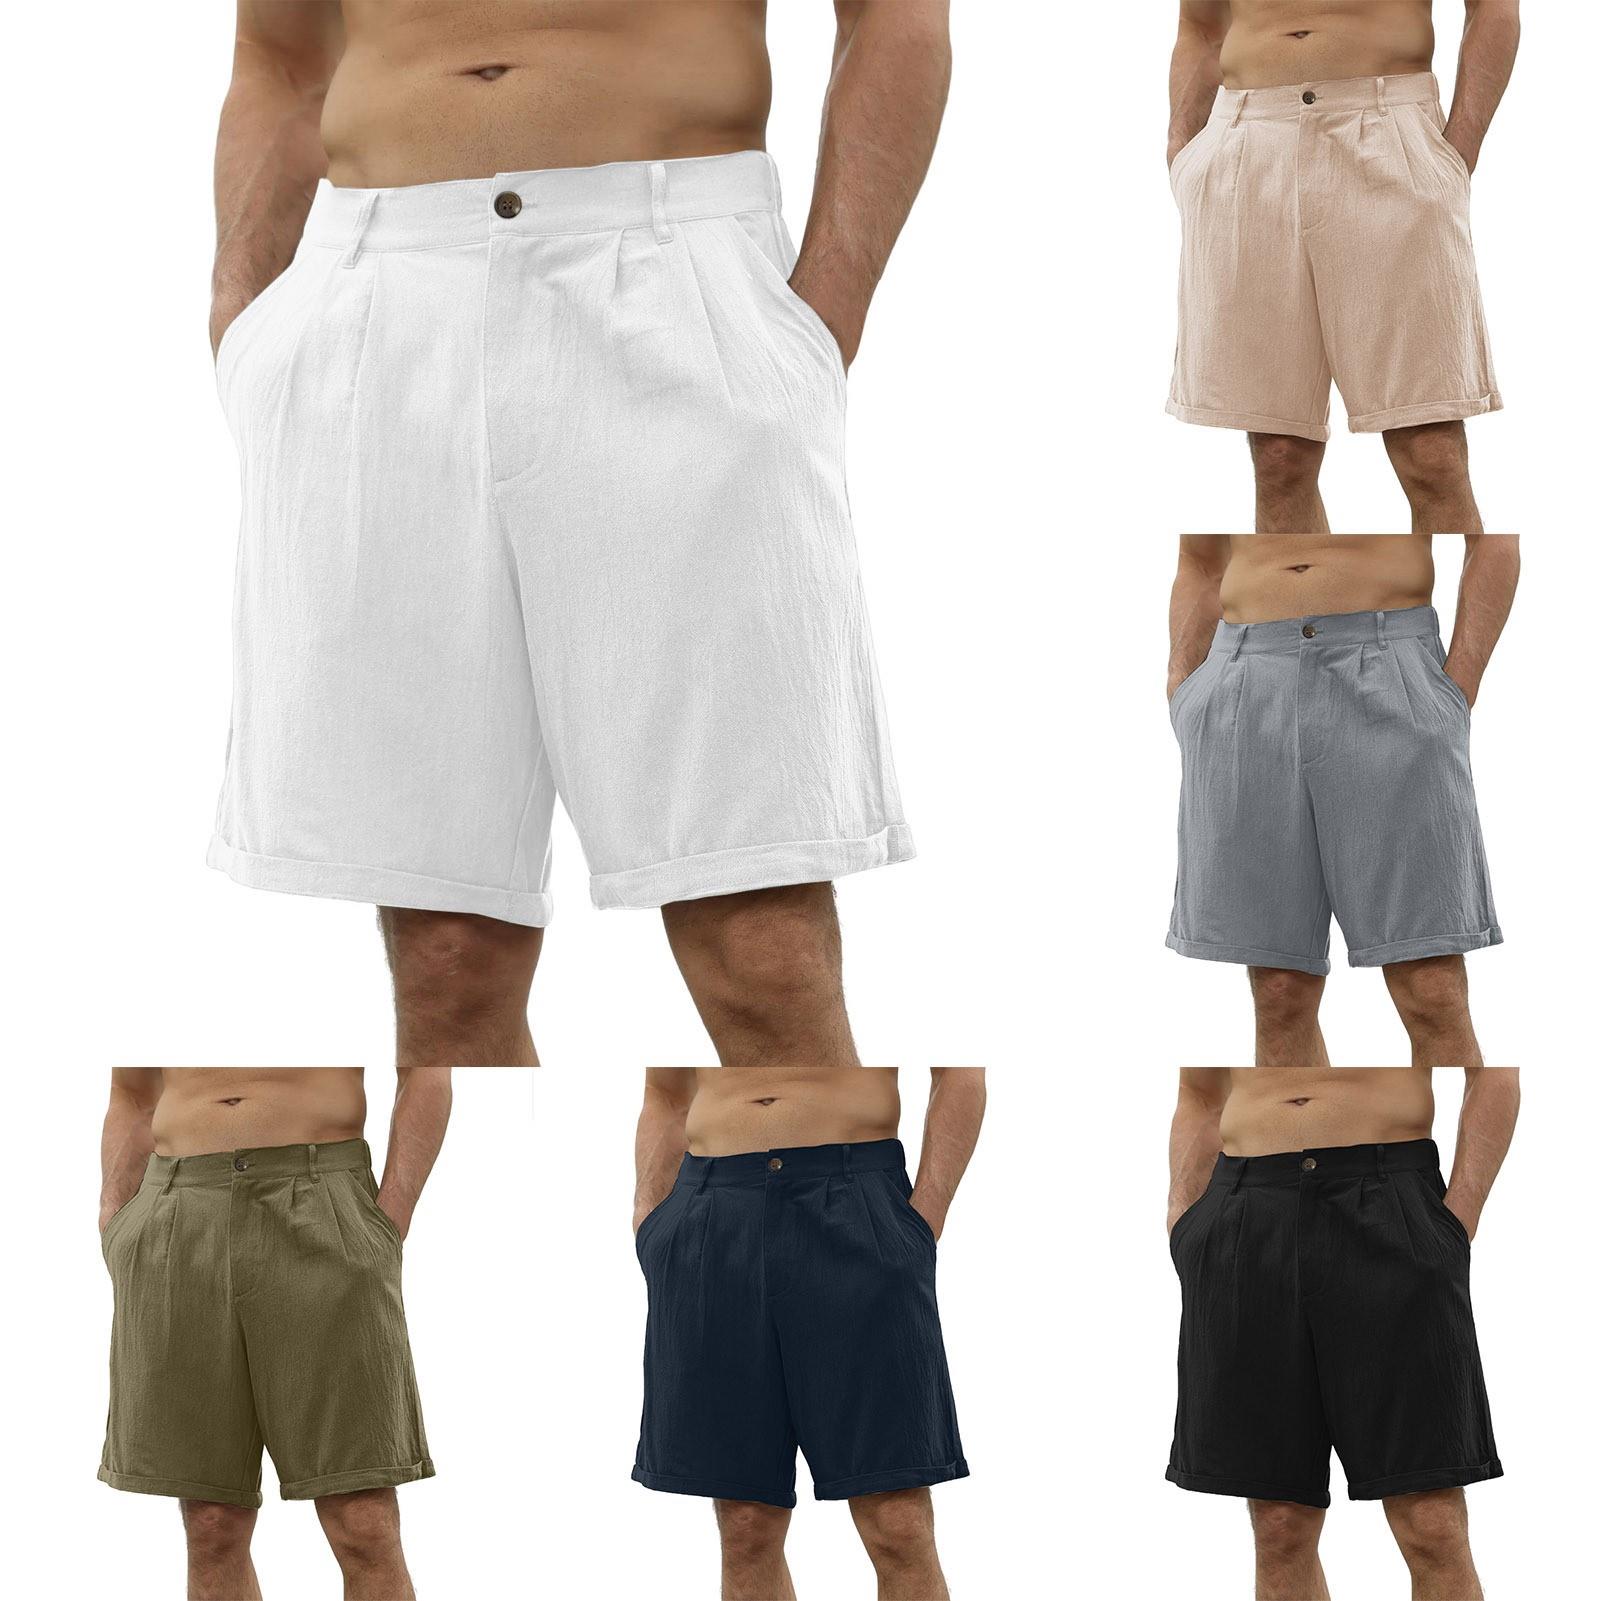 Shorts Short Pants Men Board Clothing For Clothes Man Brand